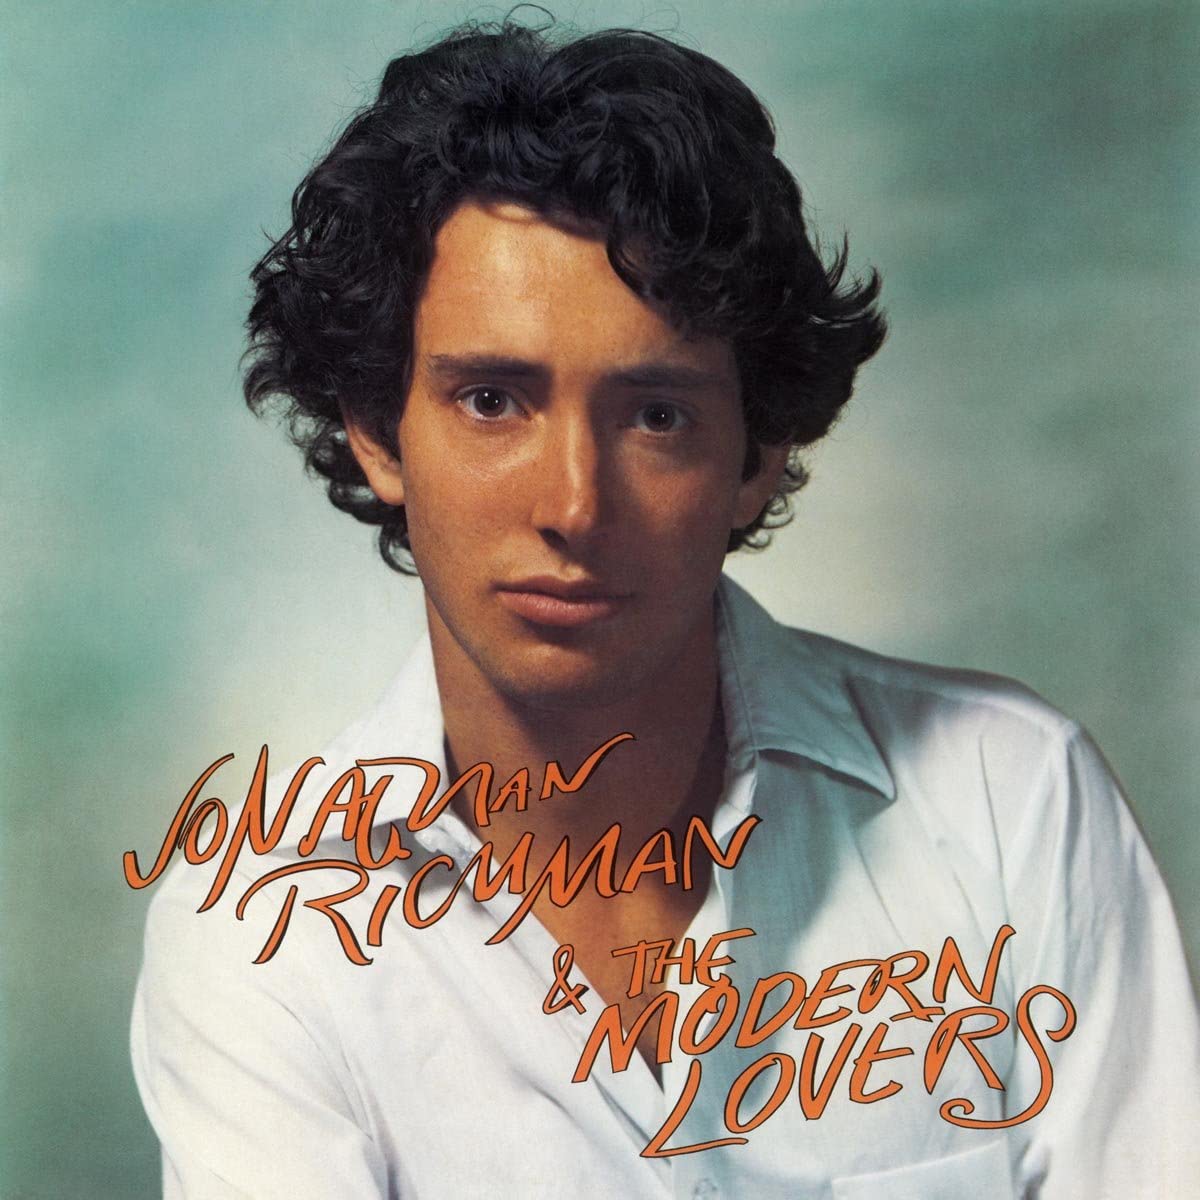 Richman, Jonathan & The Modern Lovers/Jonathan Richman & The Modern Lovers [LP]